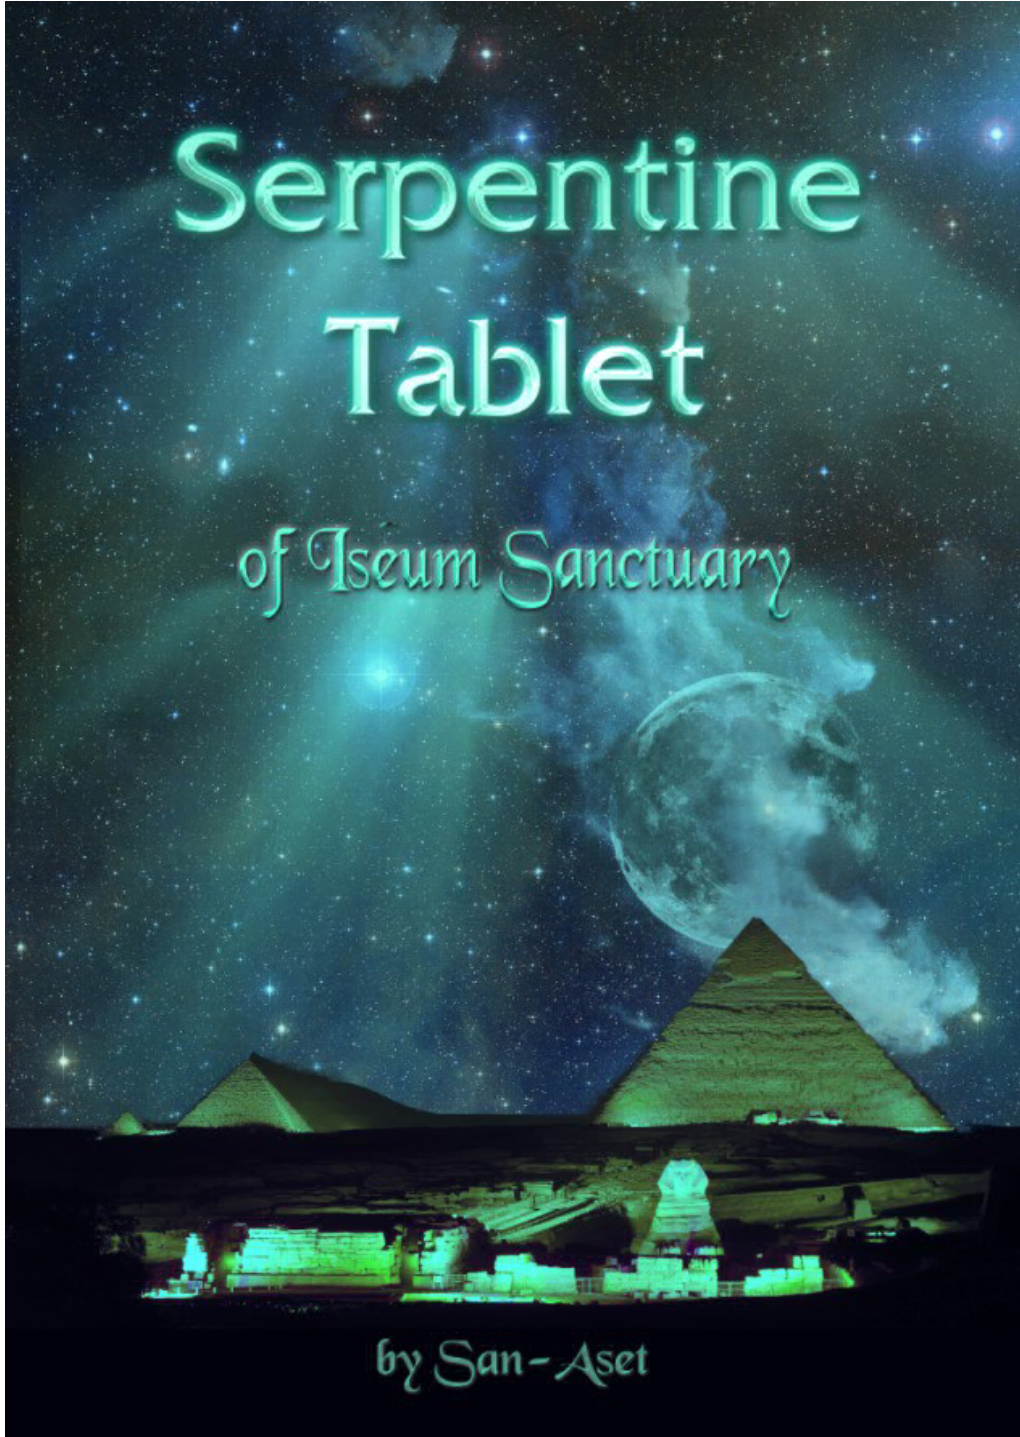 The Serpentine Tablet of Iseum Sanctuary